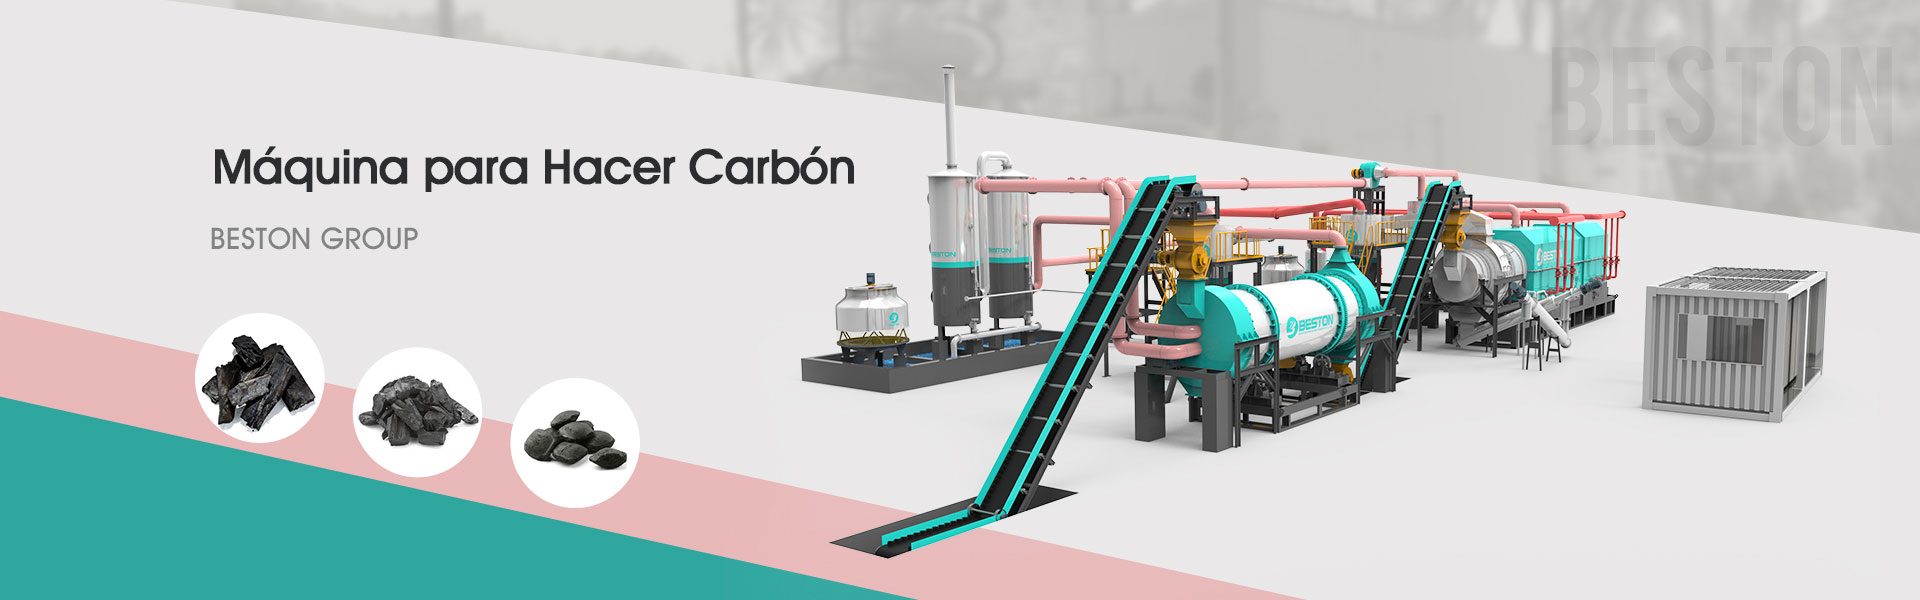 maquina para hacer carbon